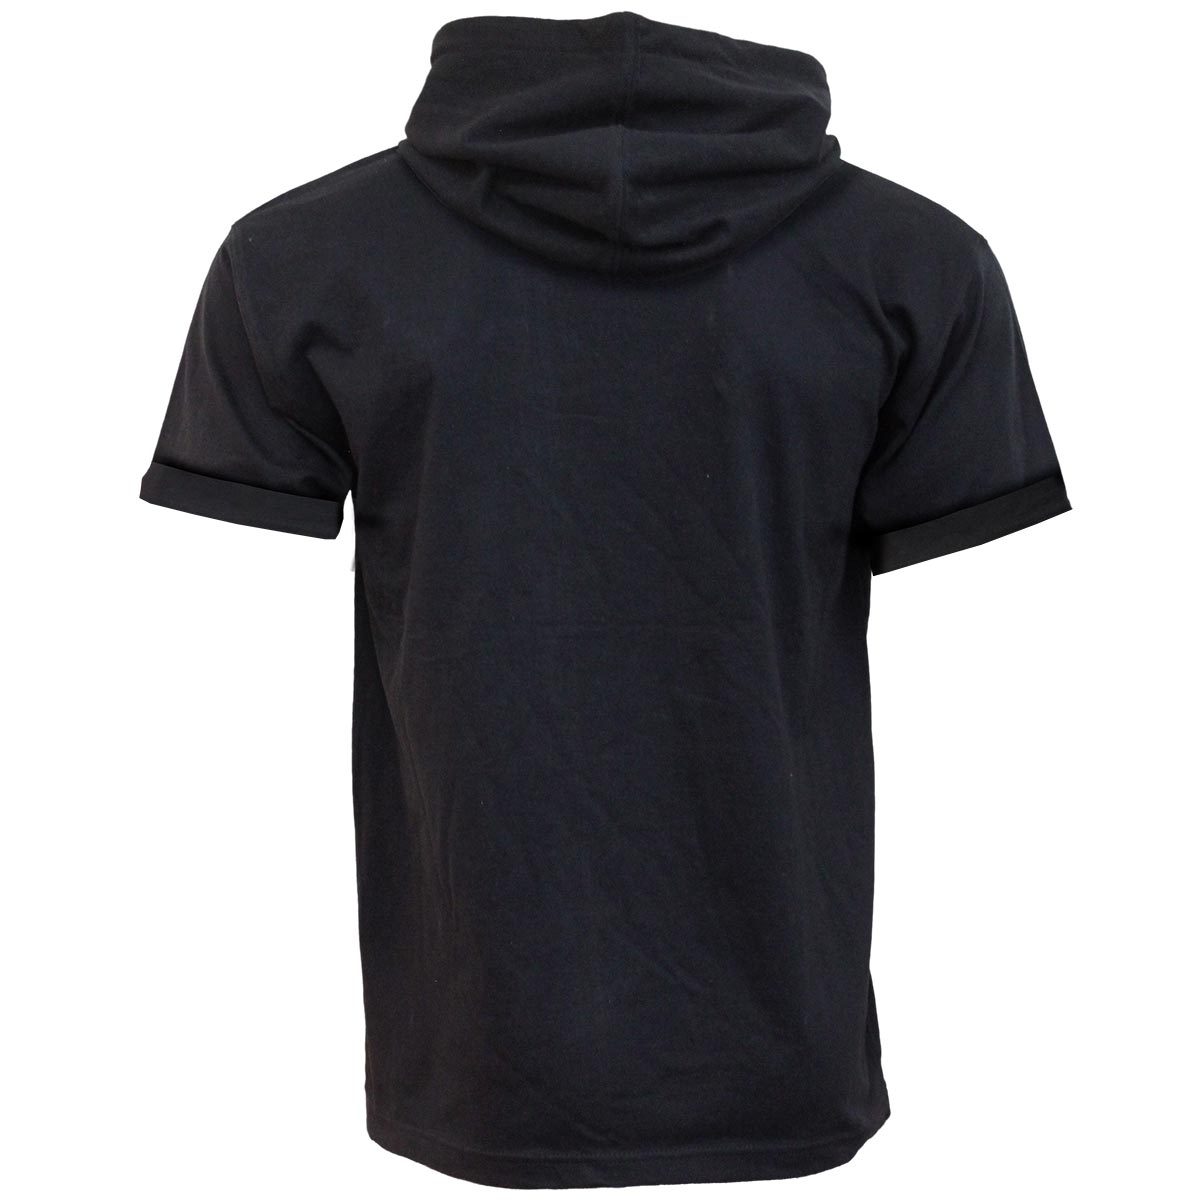 URBAN FASHION - Fine Cotton T-shirt Hoody Black - Spiral USA